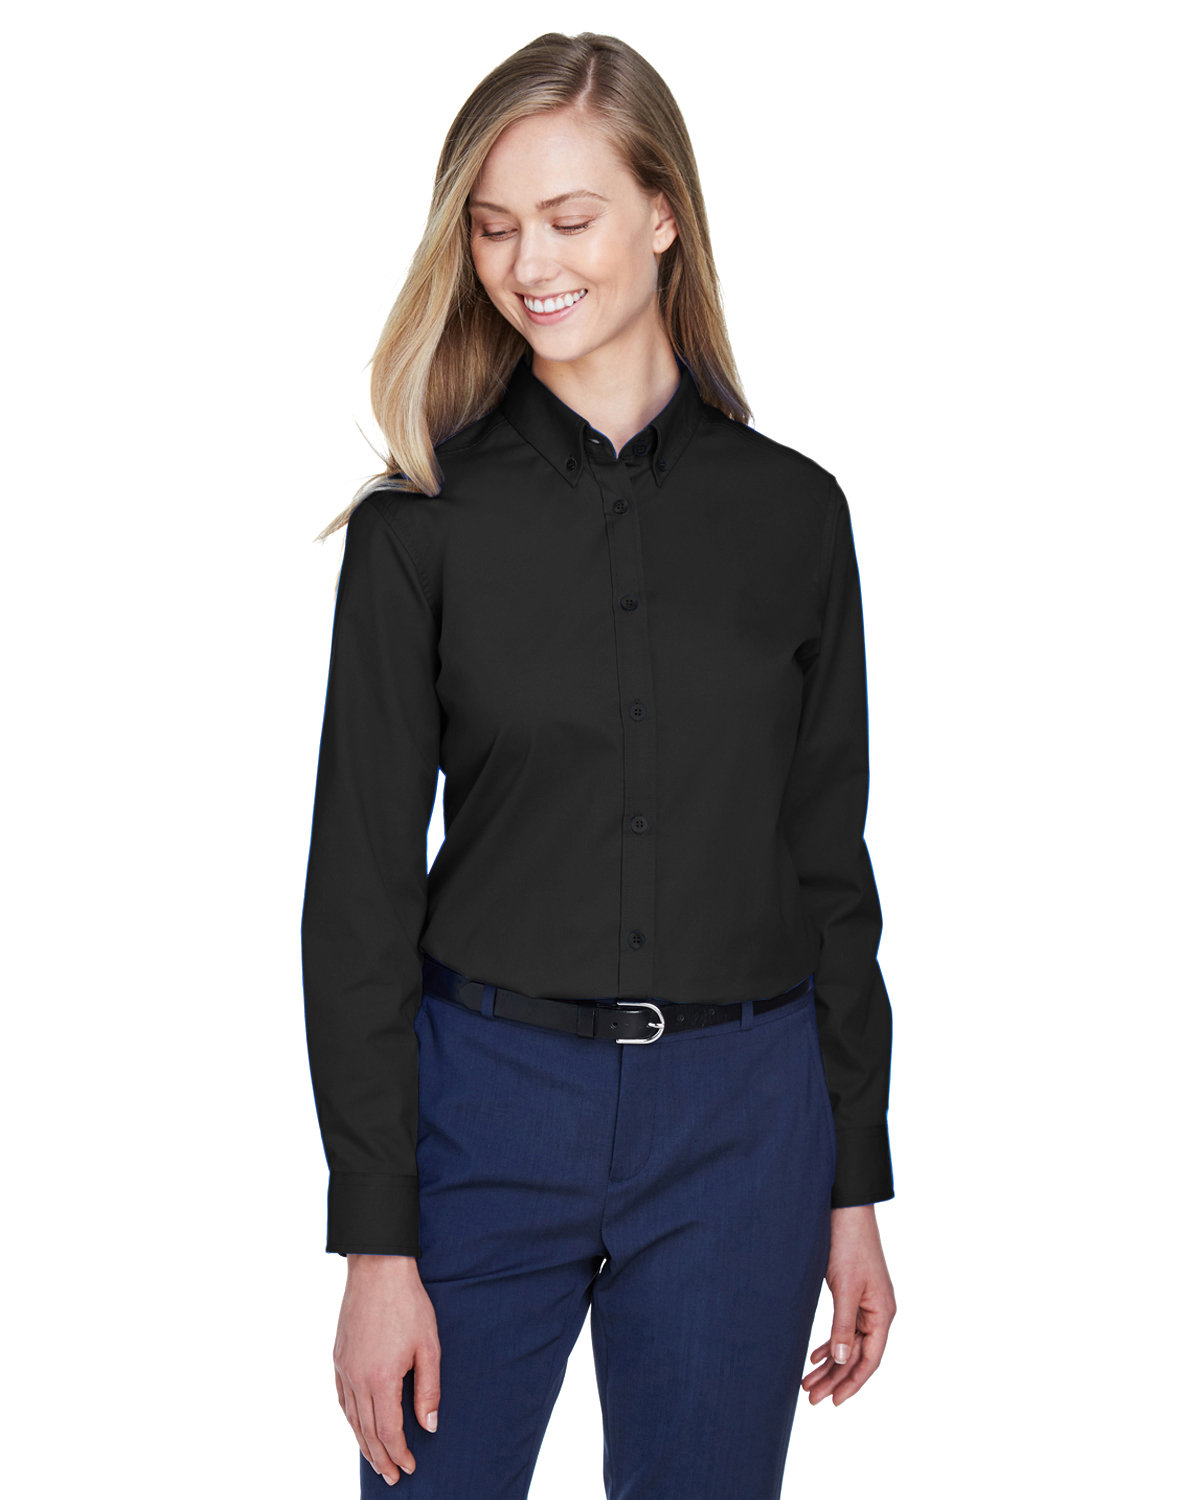 CORE365 Ladies' Operate Long-Sleeve Twill Shirt BLACK 